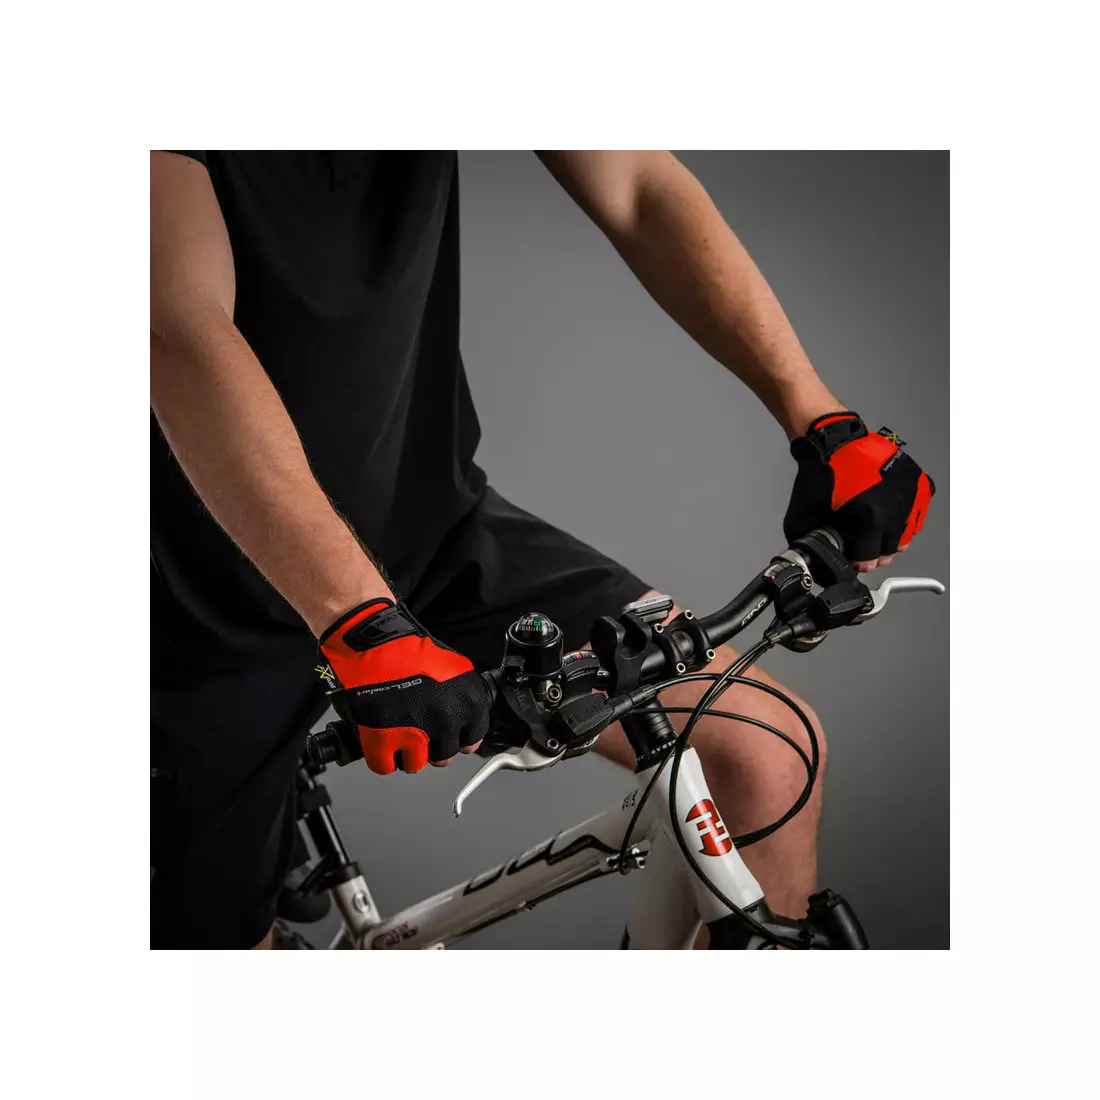 CHIBA GEL COMFORT cyklistické rukavice, orange, 3040518